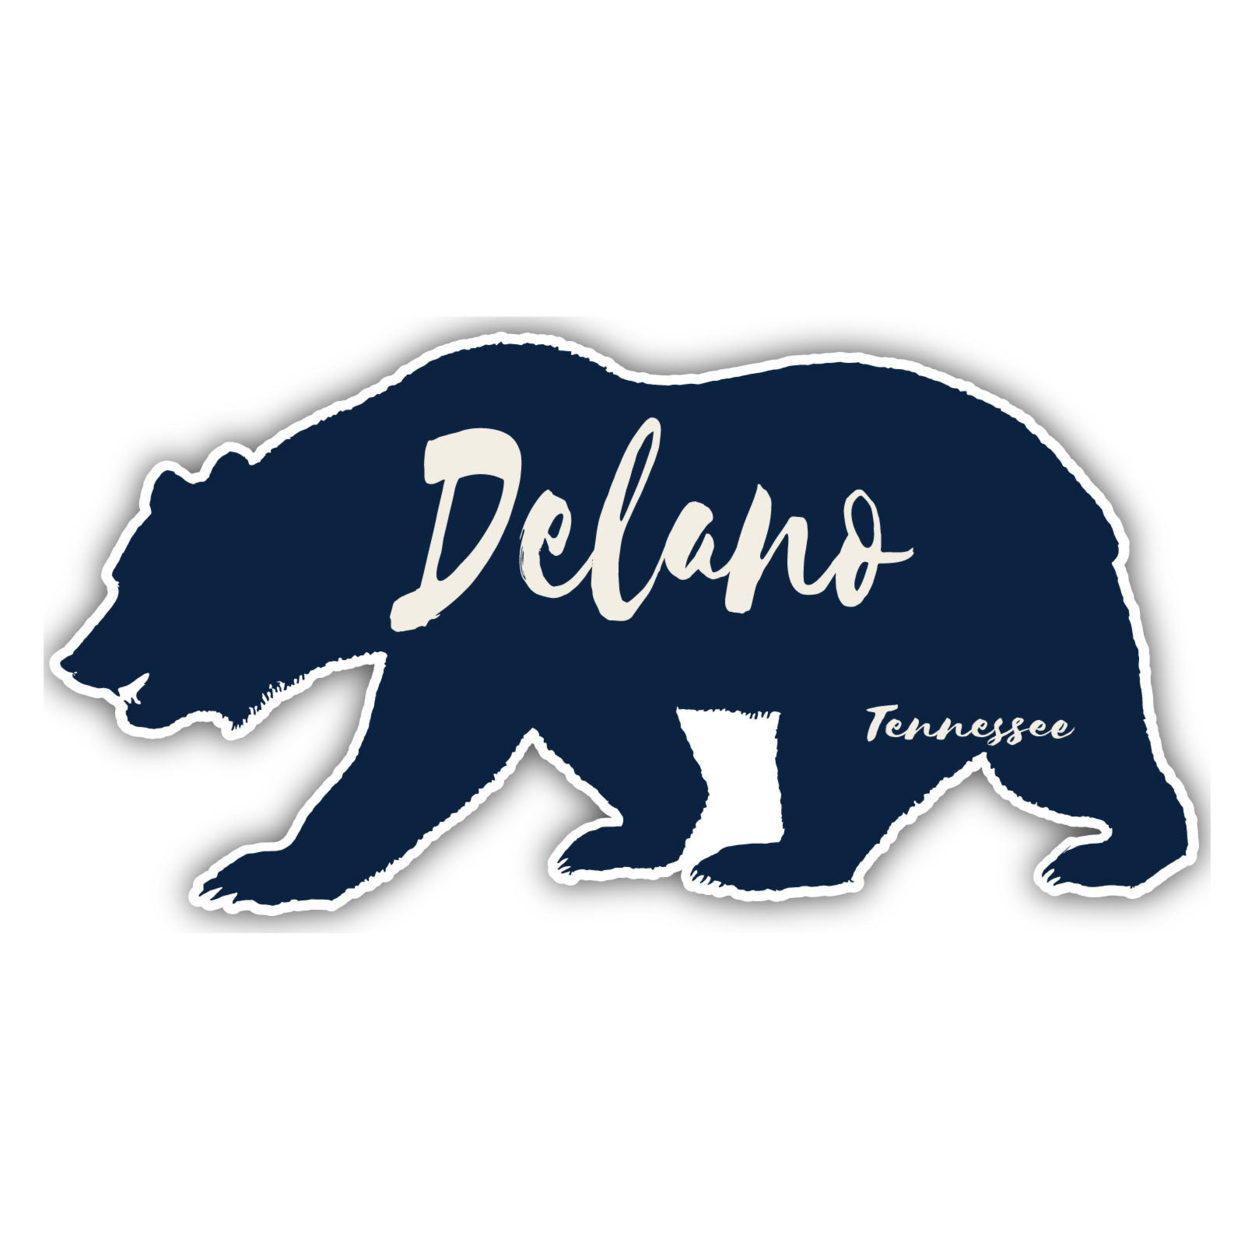 Delano Tennessee Souvenir Decorative Stickers (Choose Theme And Size) - Single Unit, 2-Inch, Bear